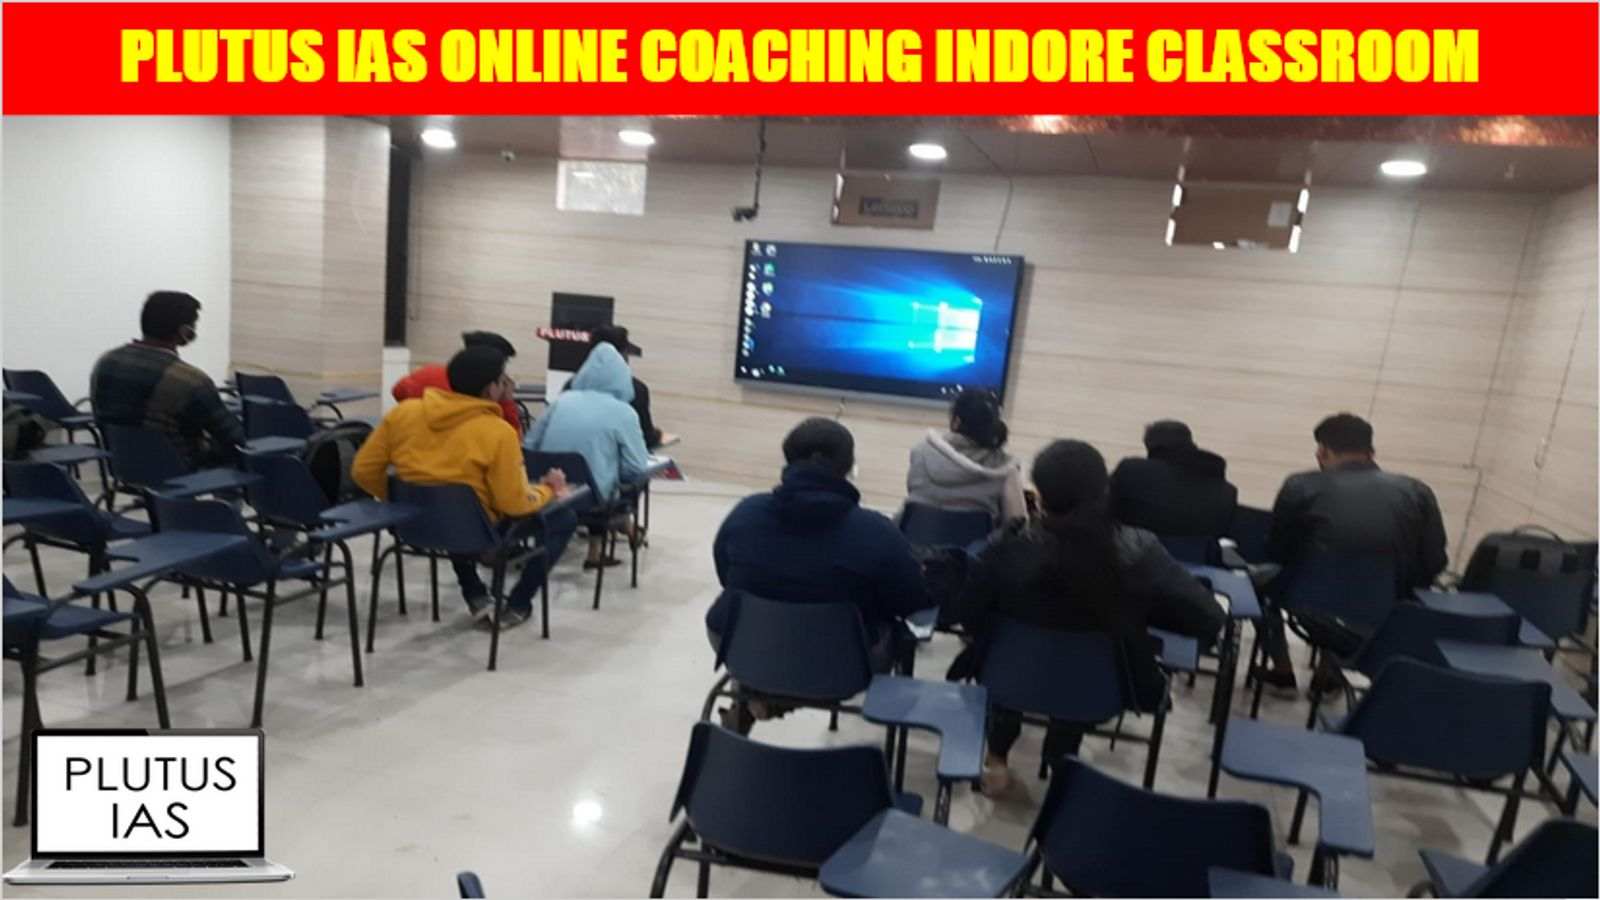 Plutus IAS Online Coaching Indore Class Room